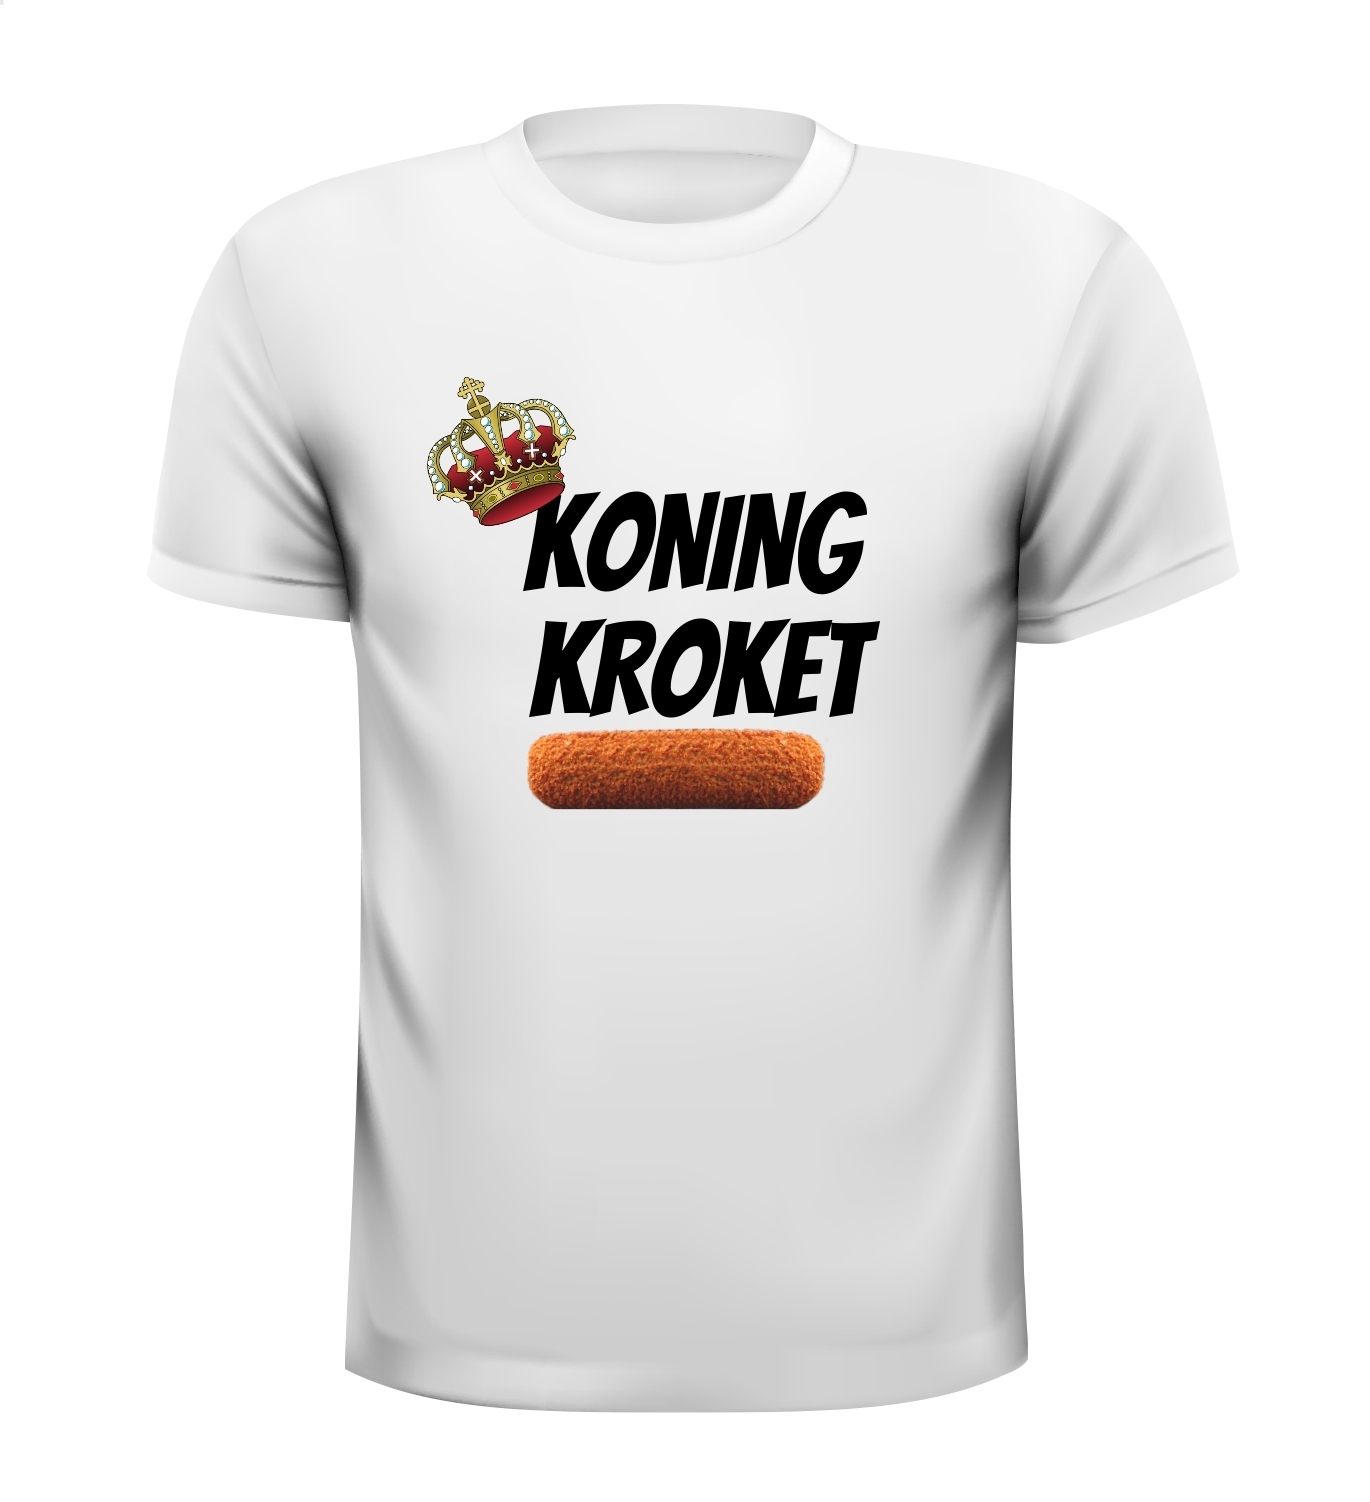 Koning kroket T-shirt snackbar patatzaak lekkernij fastfood